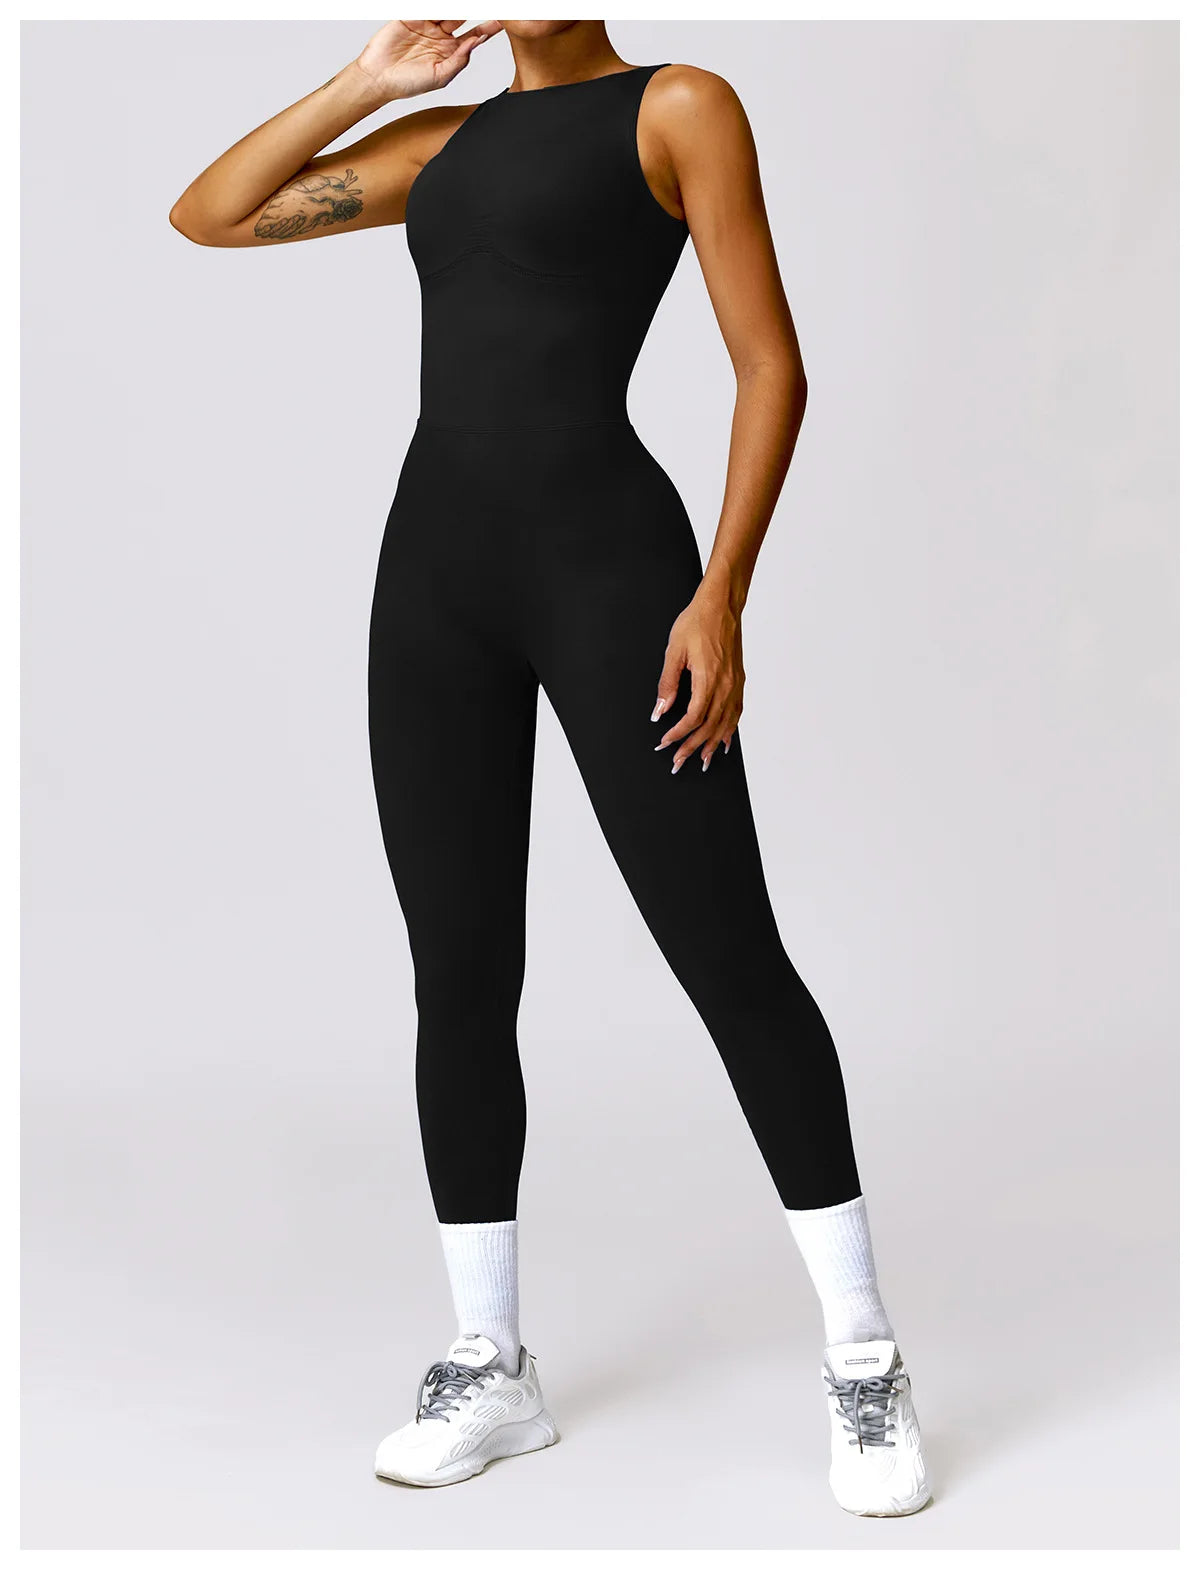 FlexiStretch Seamless Yoga Sleeveless Leggings Jumpsuit-Modern Active